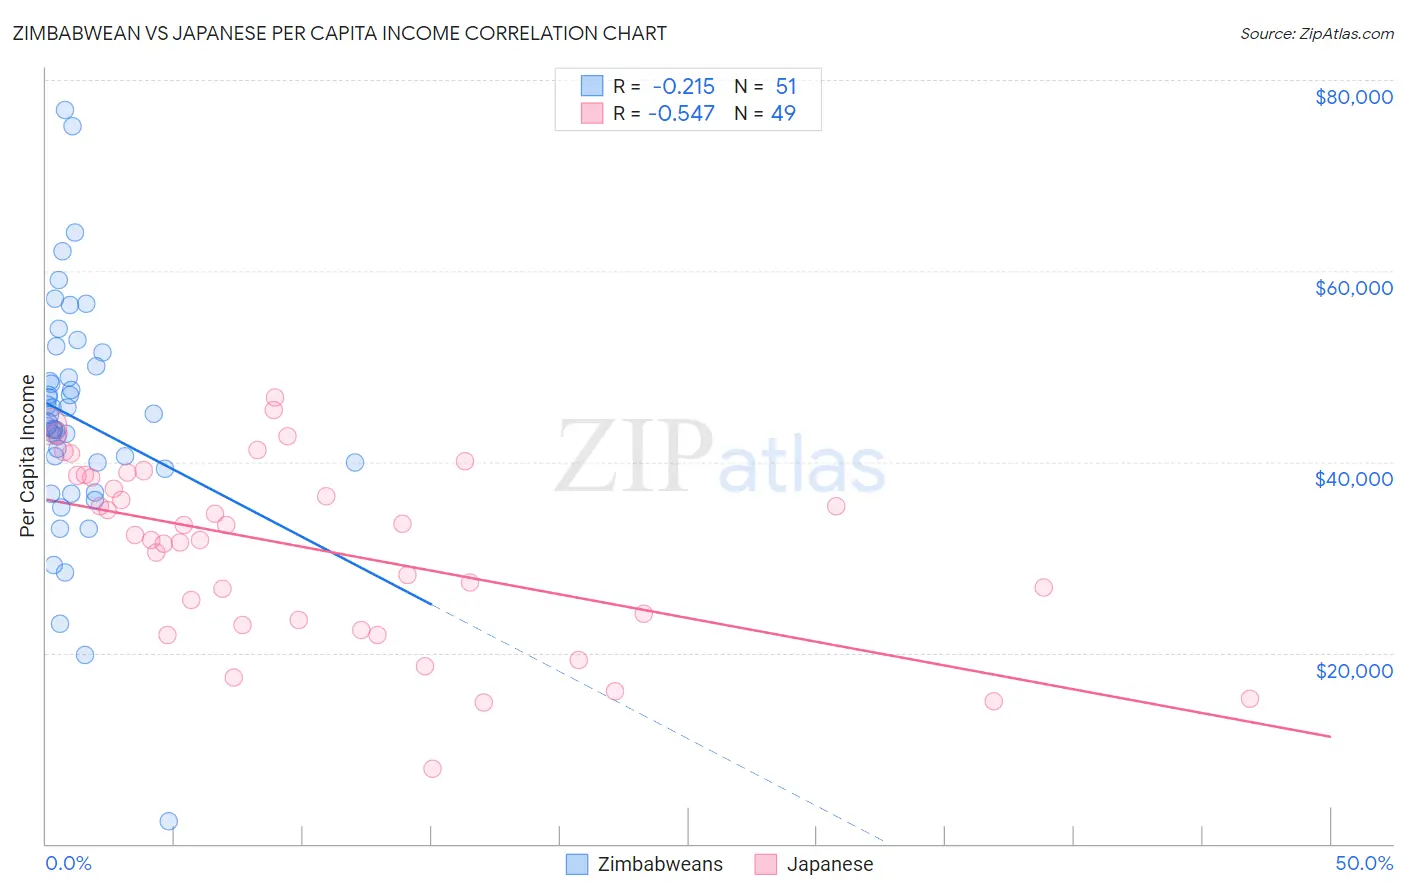 Zimbabwean vs Japanese Per Capita Income